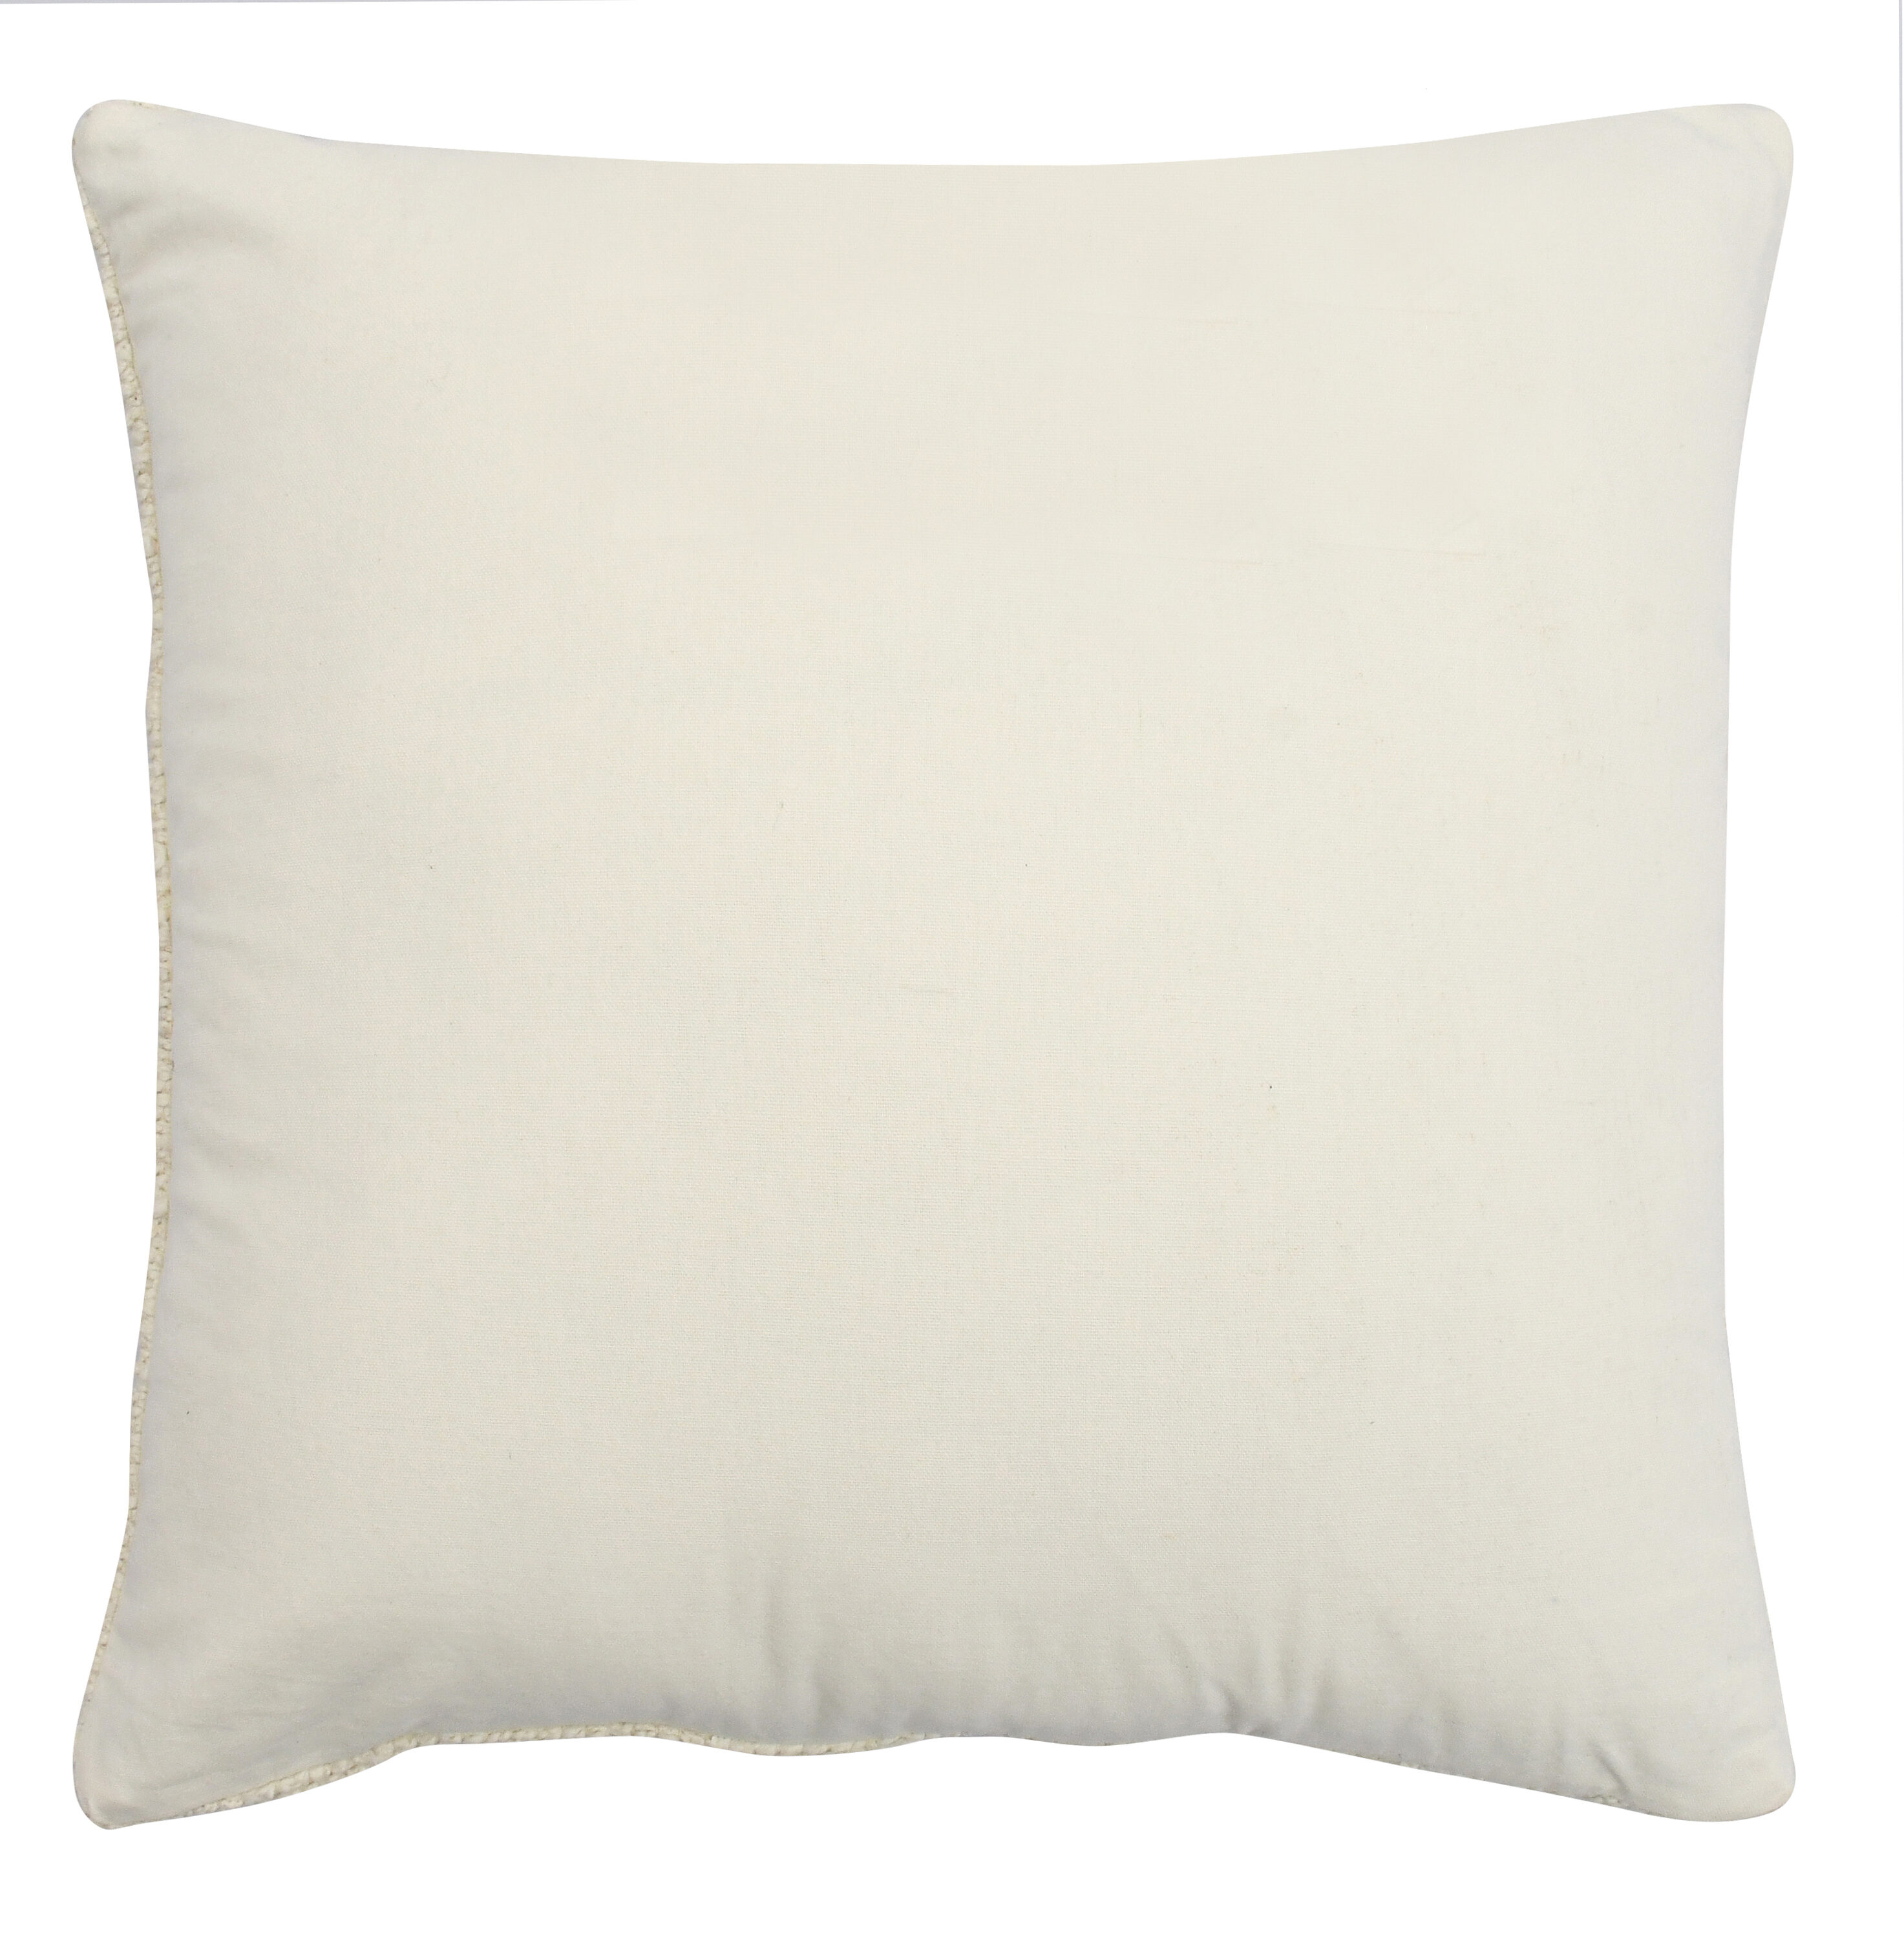 Origin 21 22-in x 22-in Off-white Indoor Decorative Pillow in the Throw ...